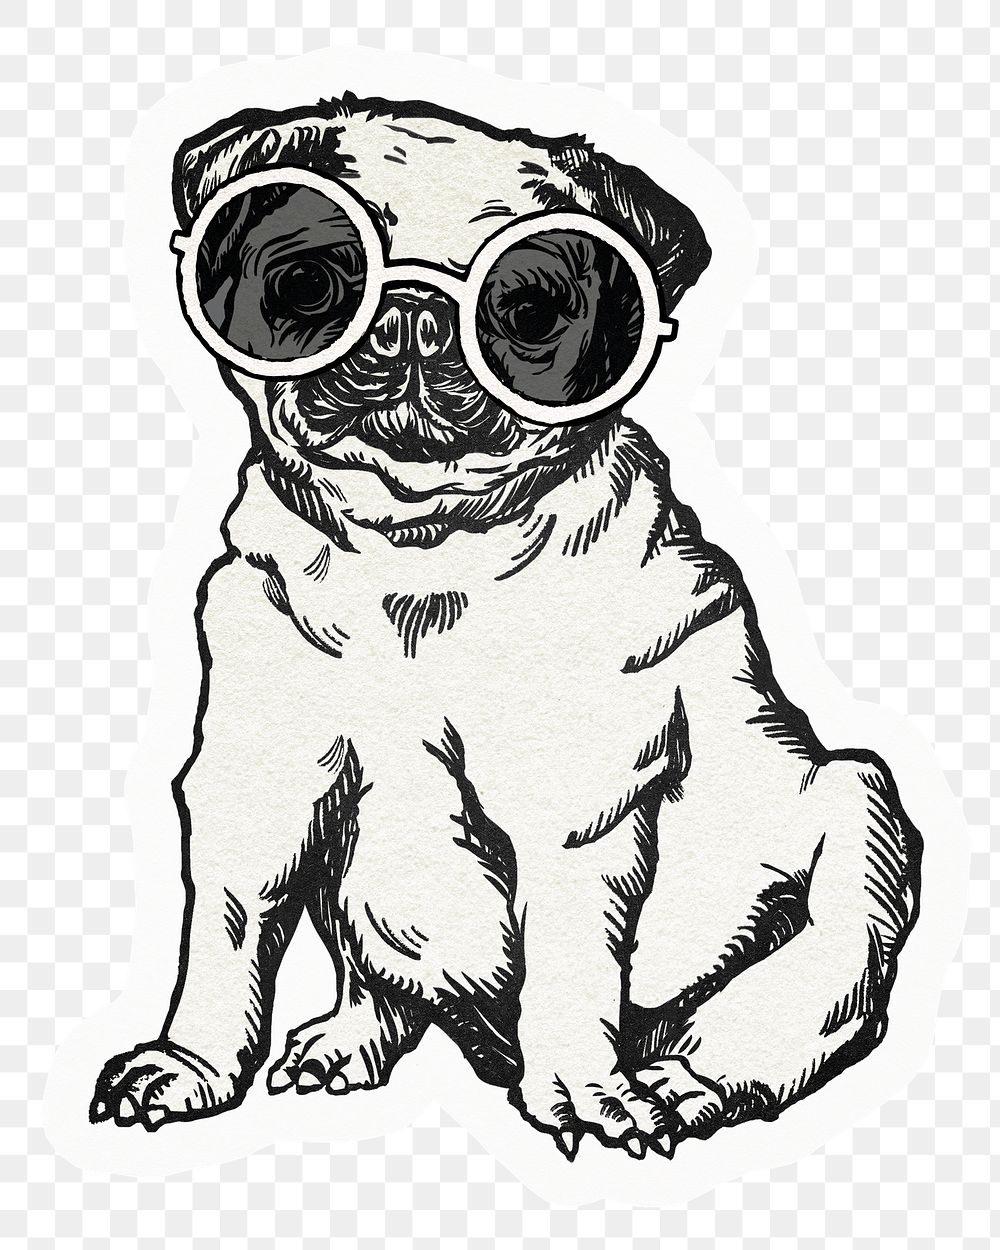 Cute pug dog png sticker, drawing illustration, transparent background